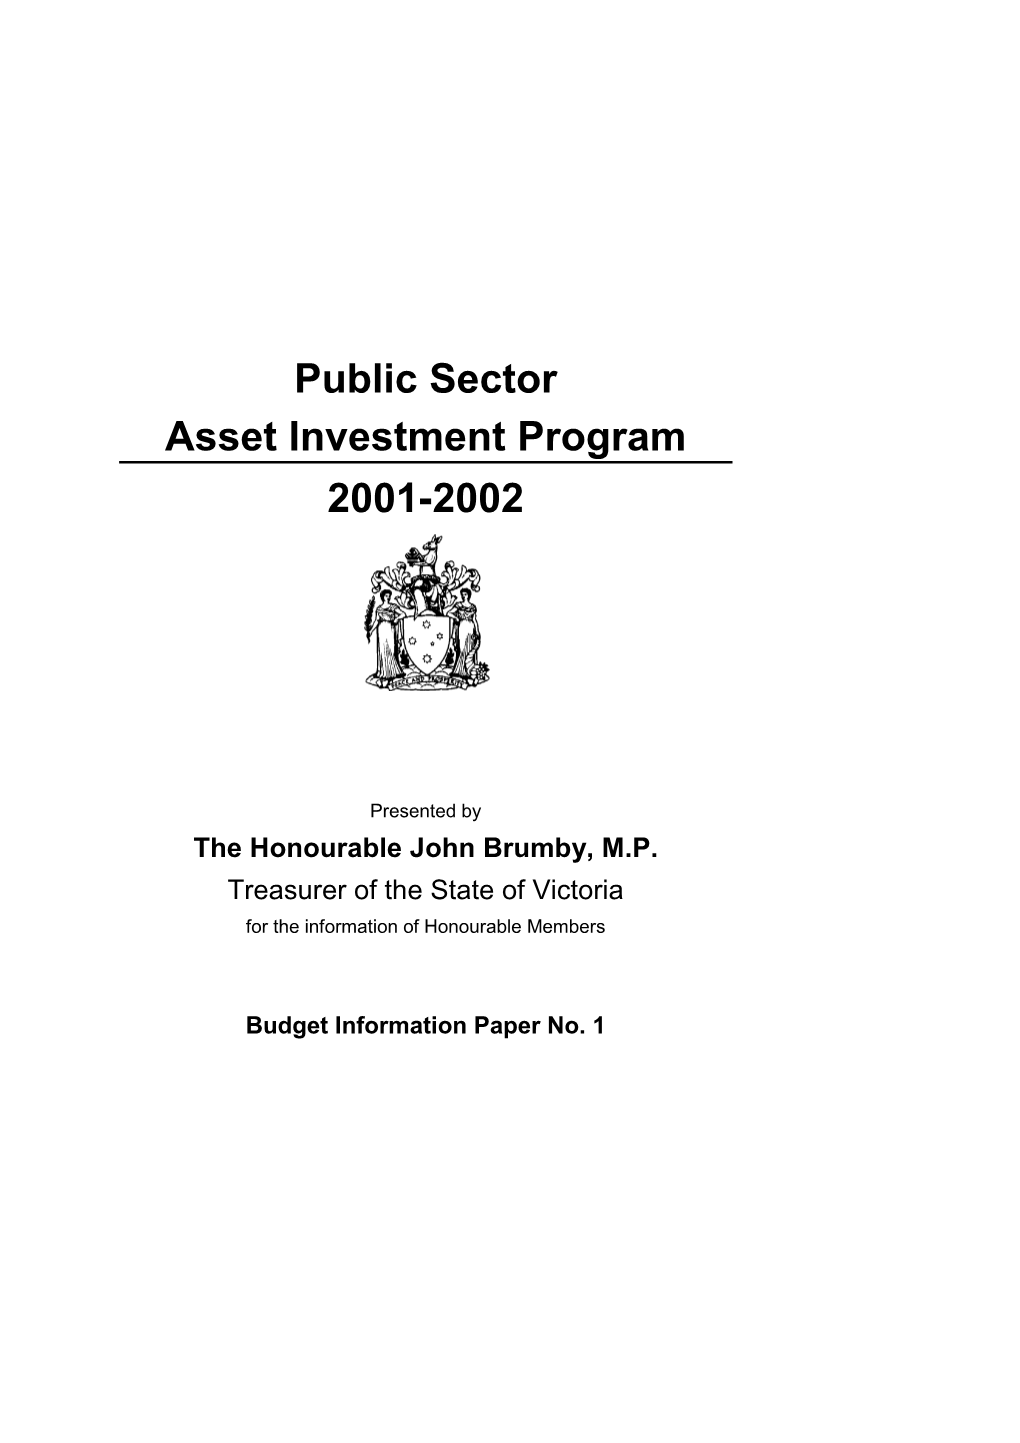 Public Sector Asset Investment Program 2001-2002